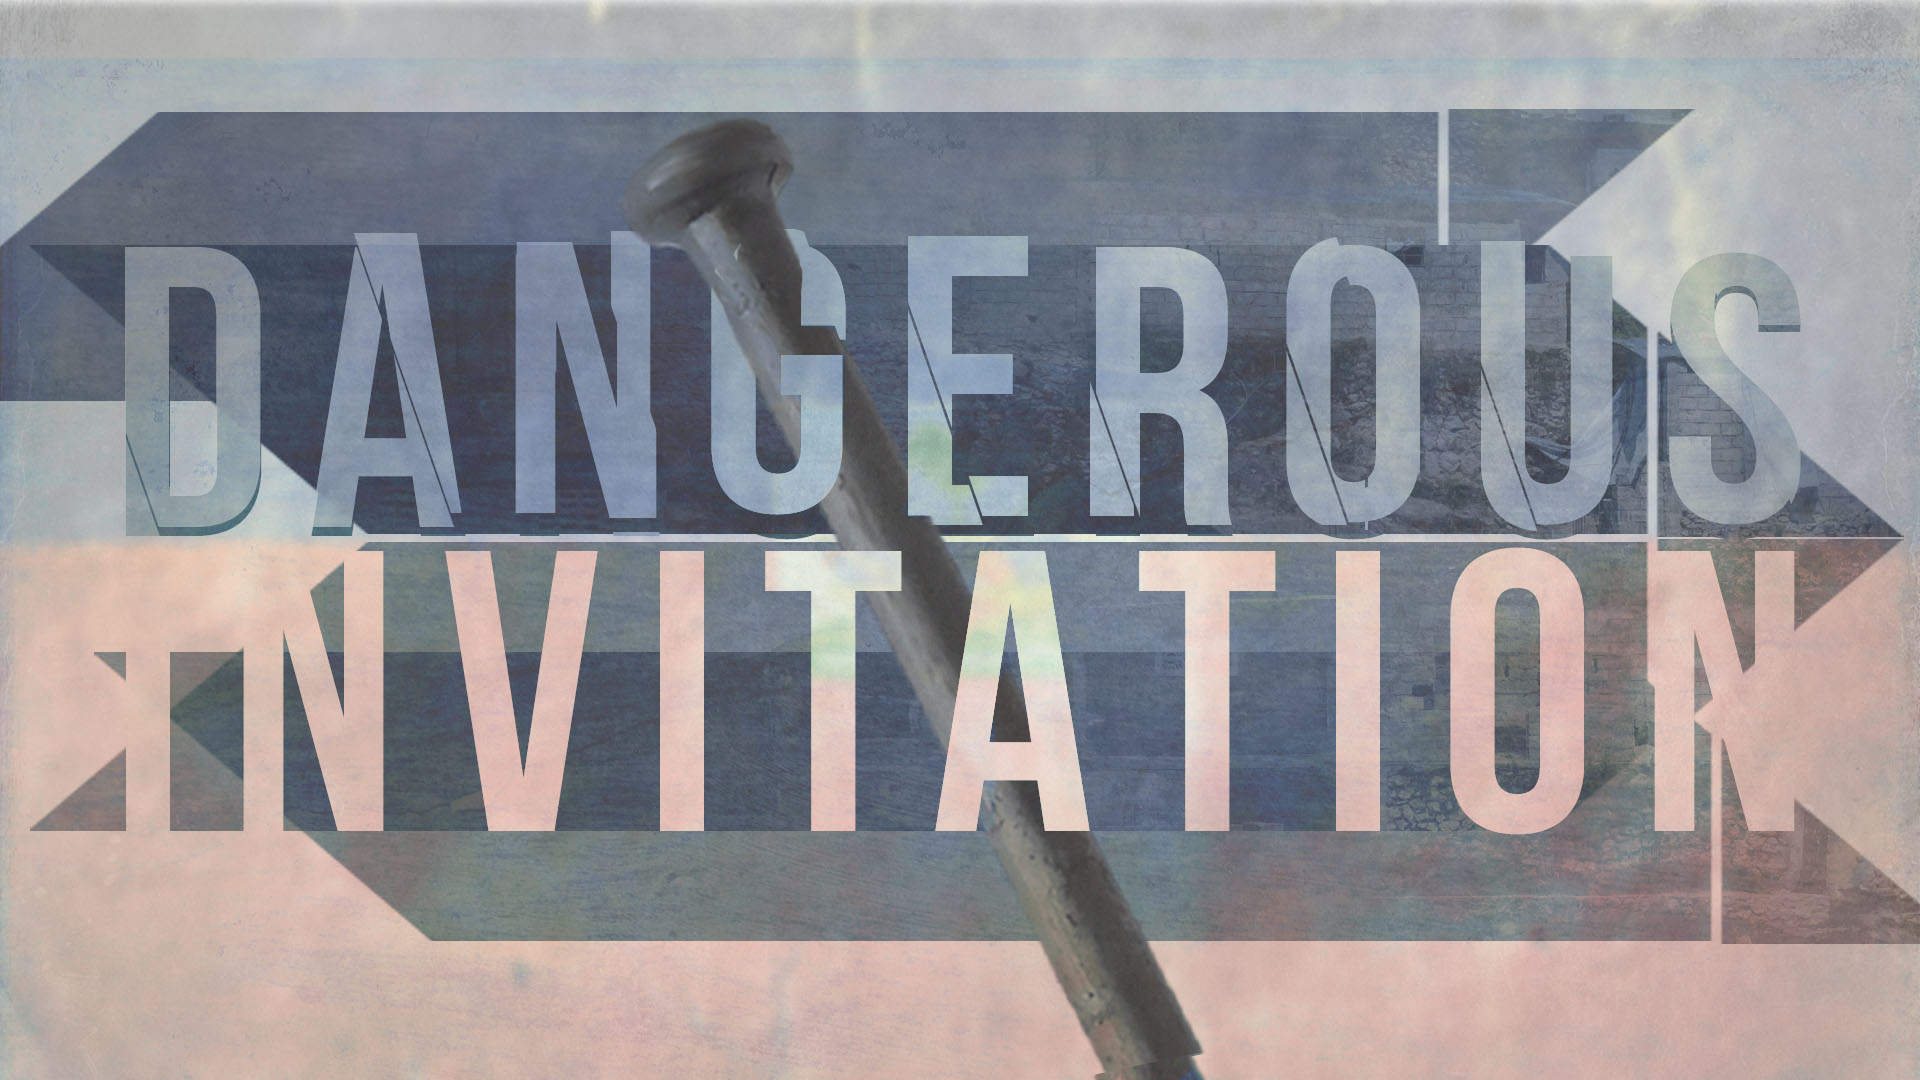 Dangerous Invitation - Week 1 - Andy Rainey